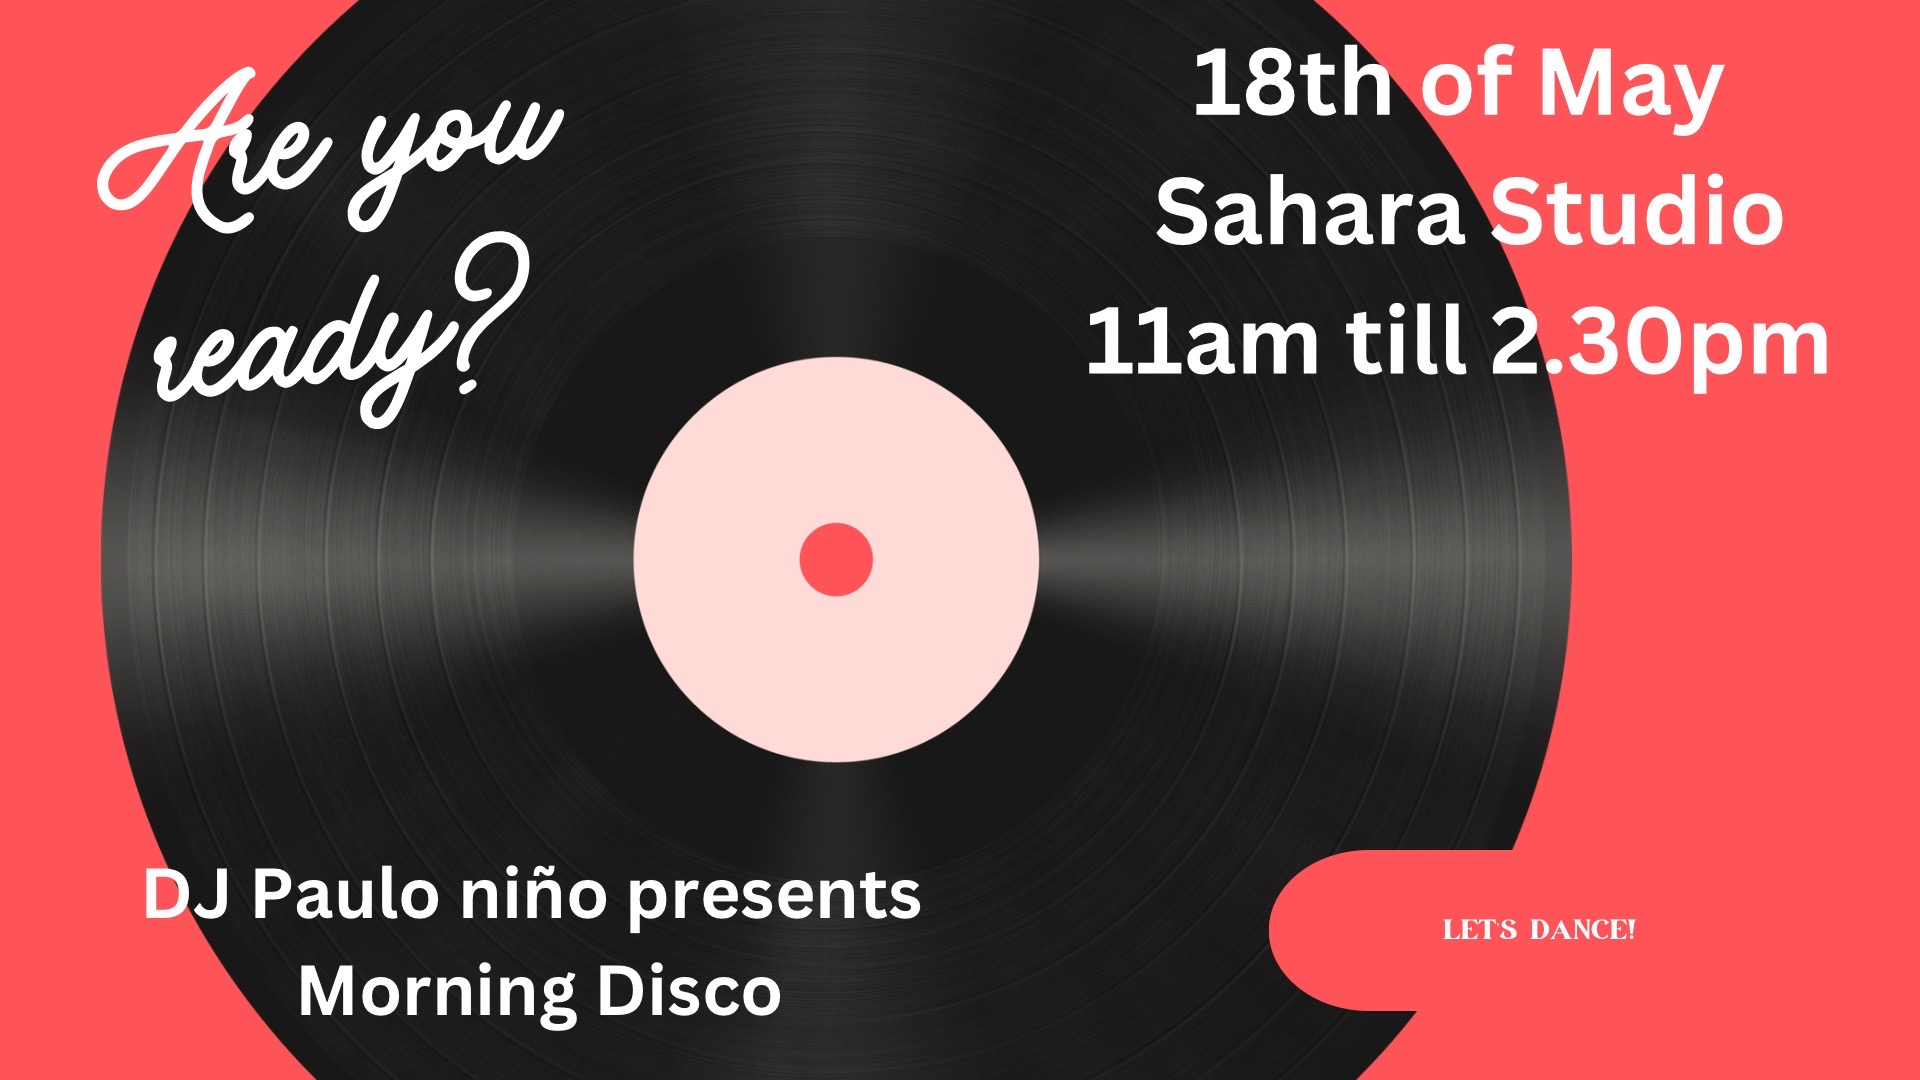 Morning Disco - On Today at Sahara Studio